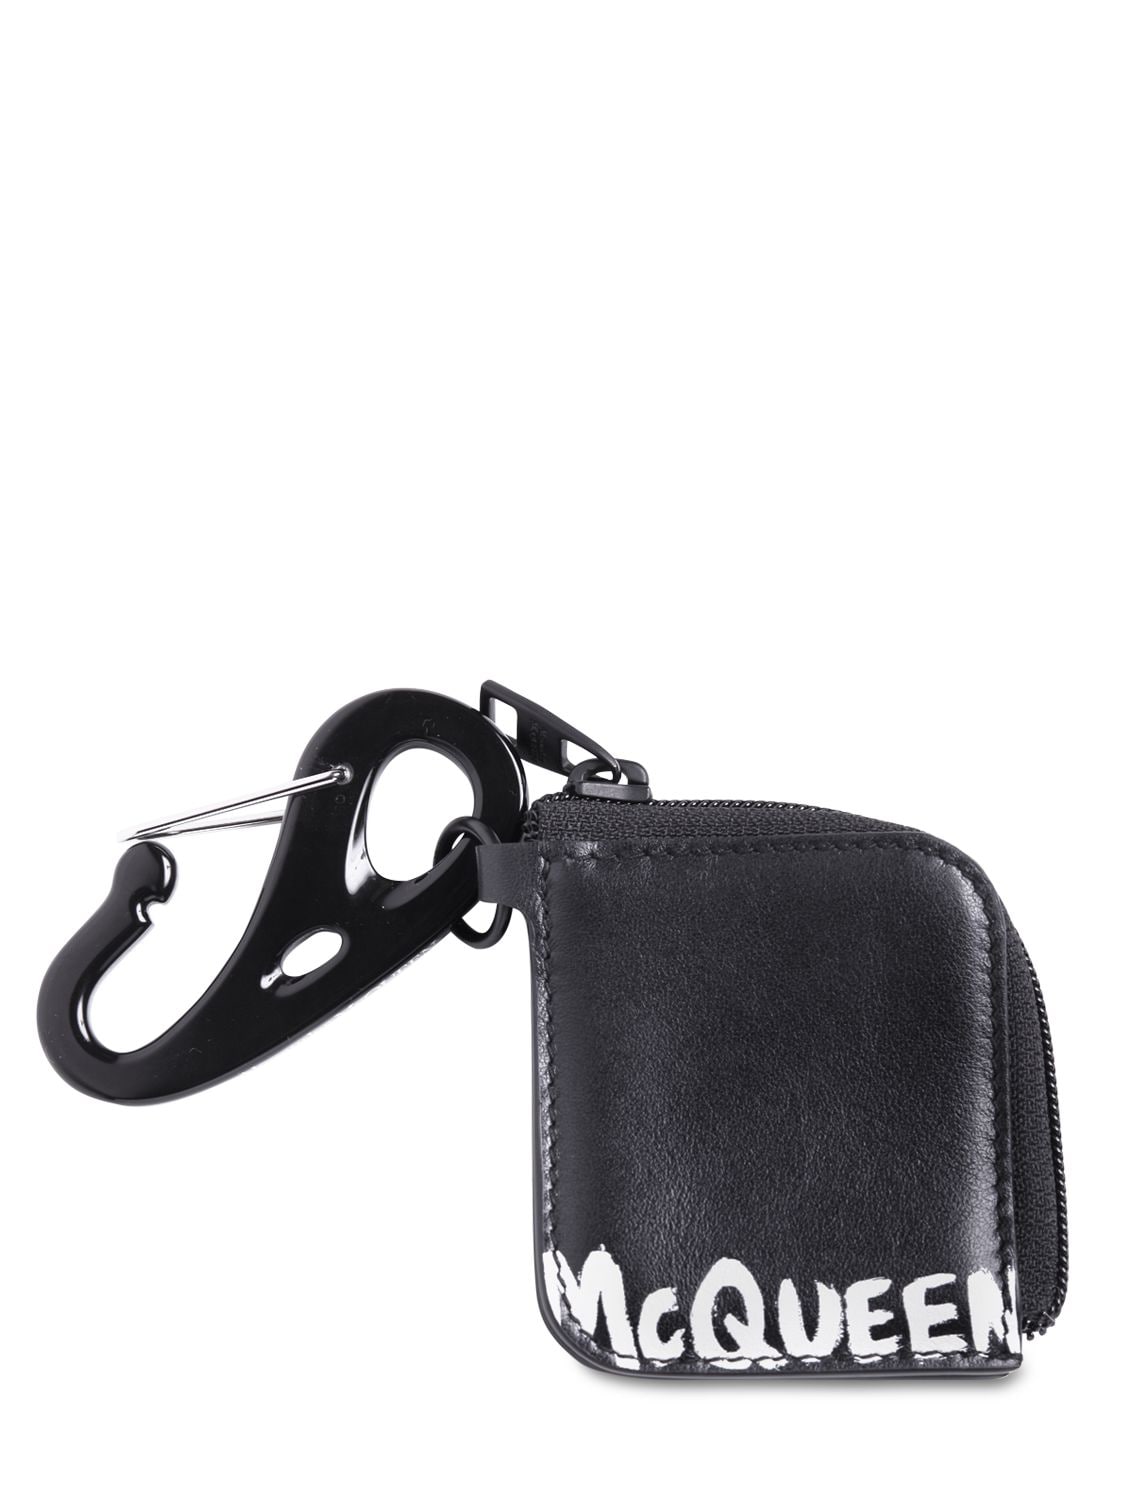 ALEXANDER MCQUEEN Logo Print Leather Zip Pouch